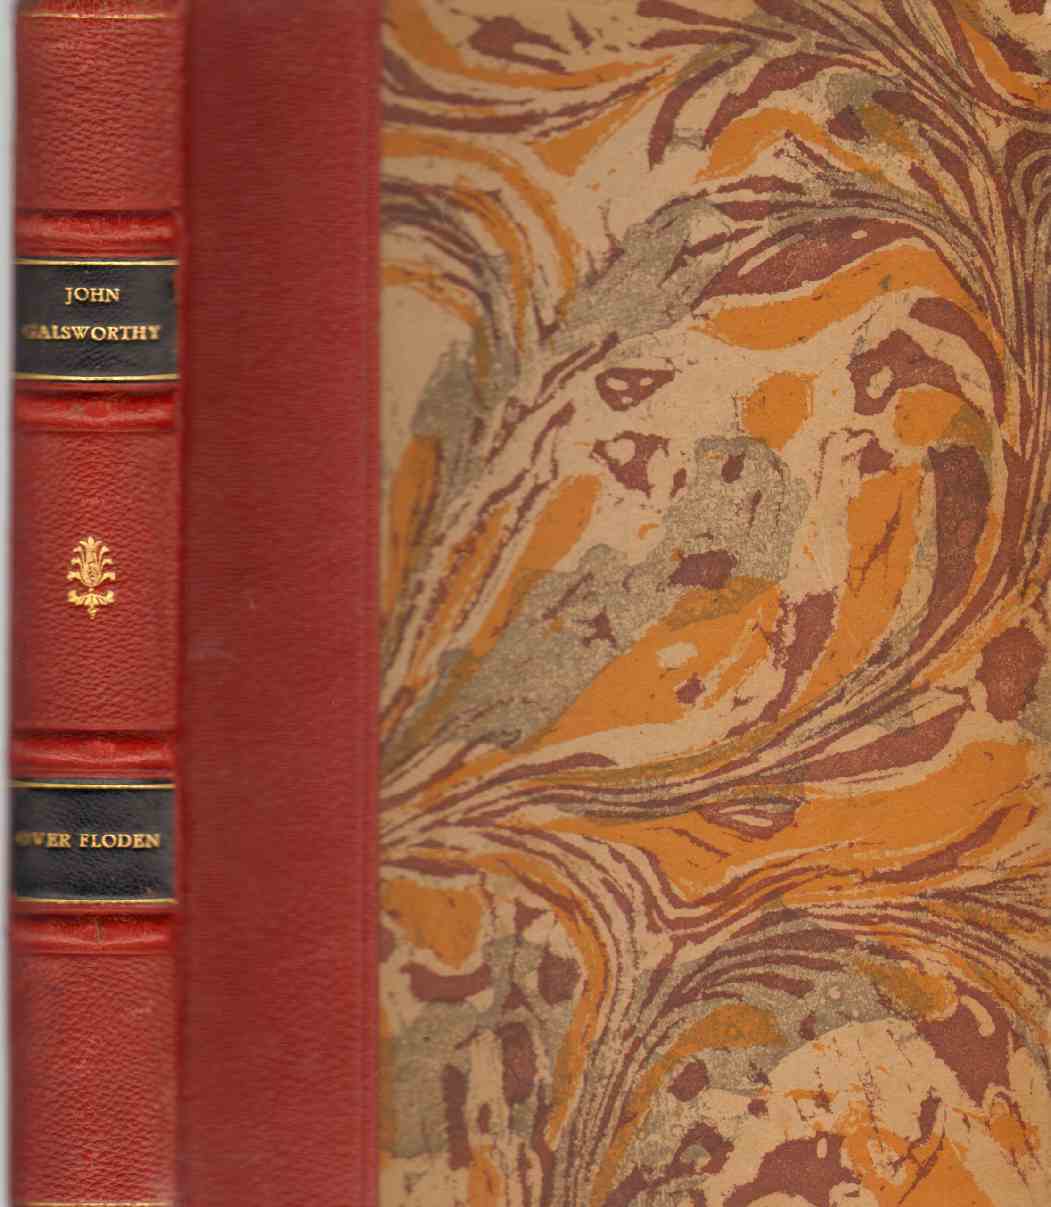 Galsworthy, John; translated Into Danish by M. Van Rheden - OVER FLODEN